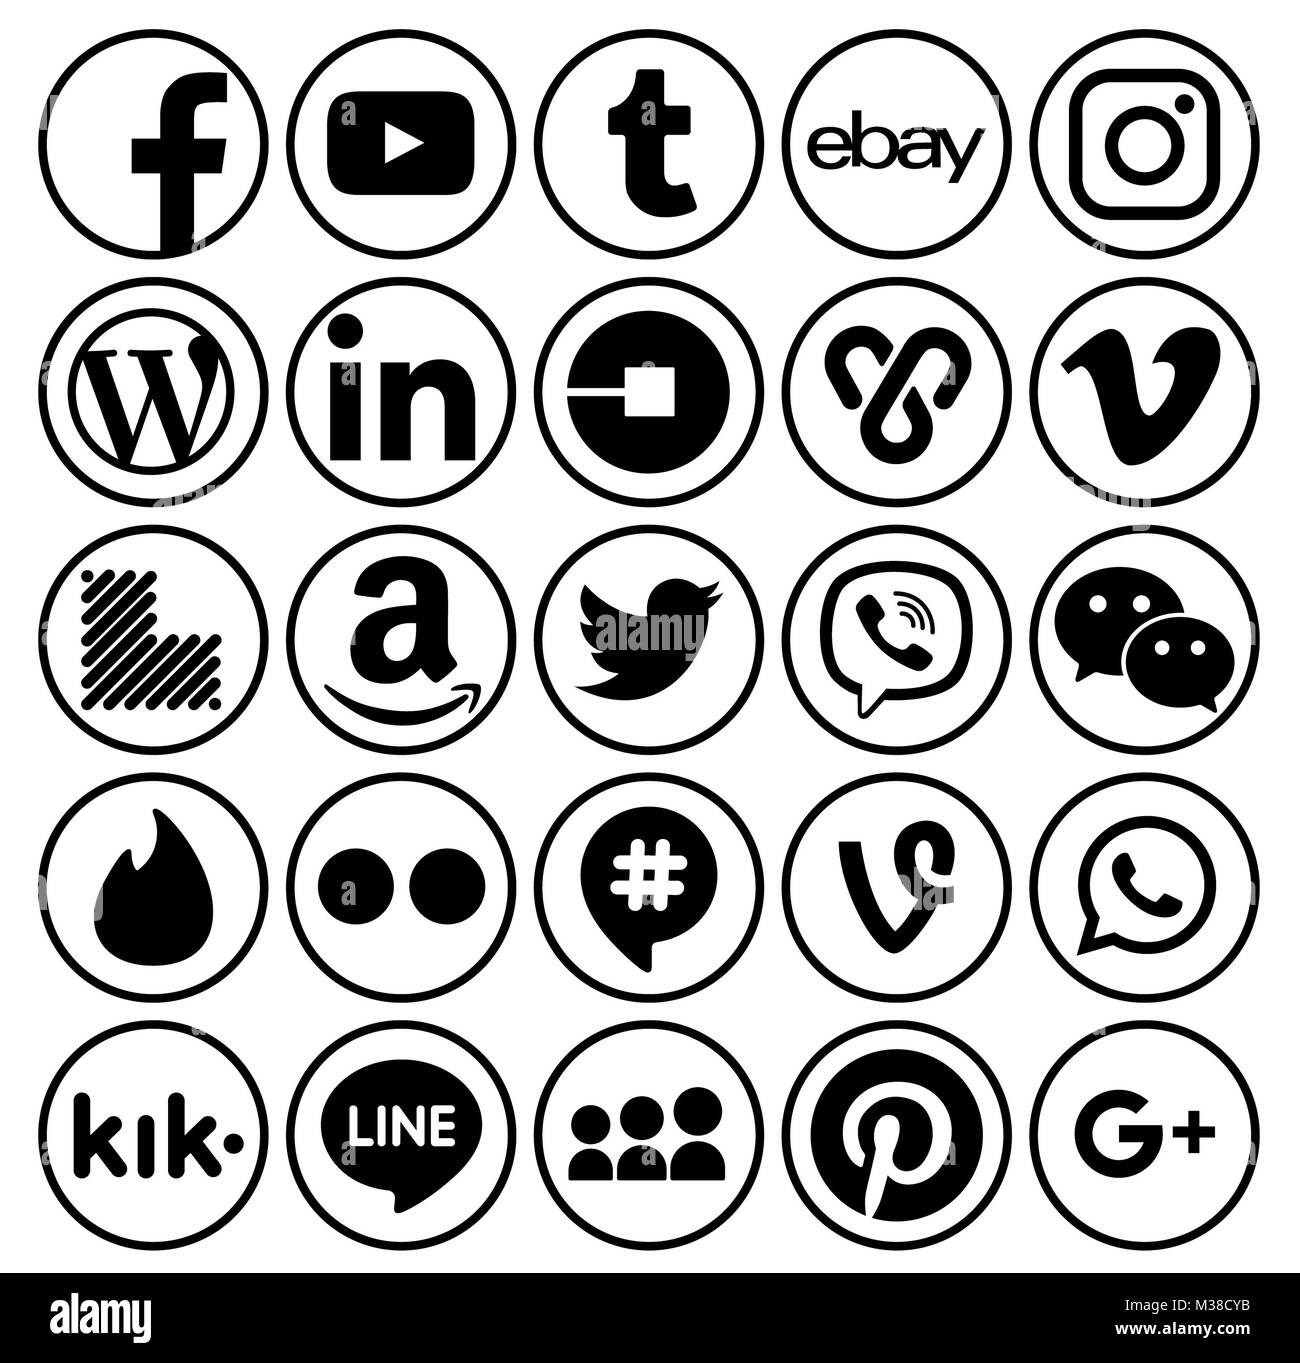 Kiev, Ukraine - September 11, 2017: Collection of popular black round social media icons, printed on paper: Facebook, Twitter, Google Plus, Instagram, Stock Photo